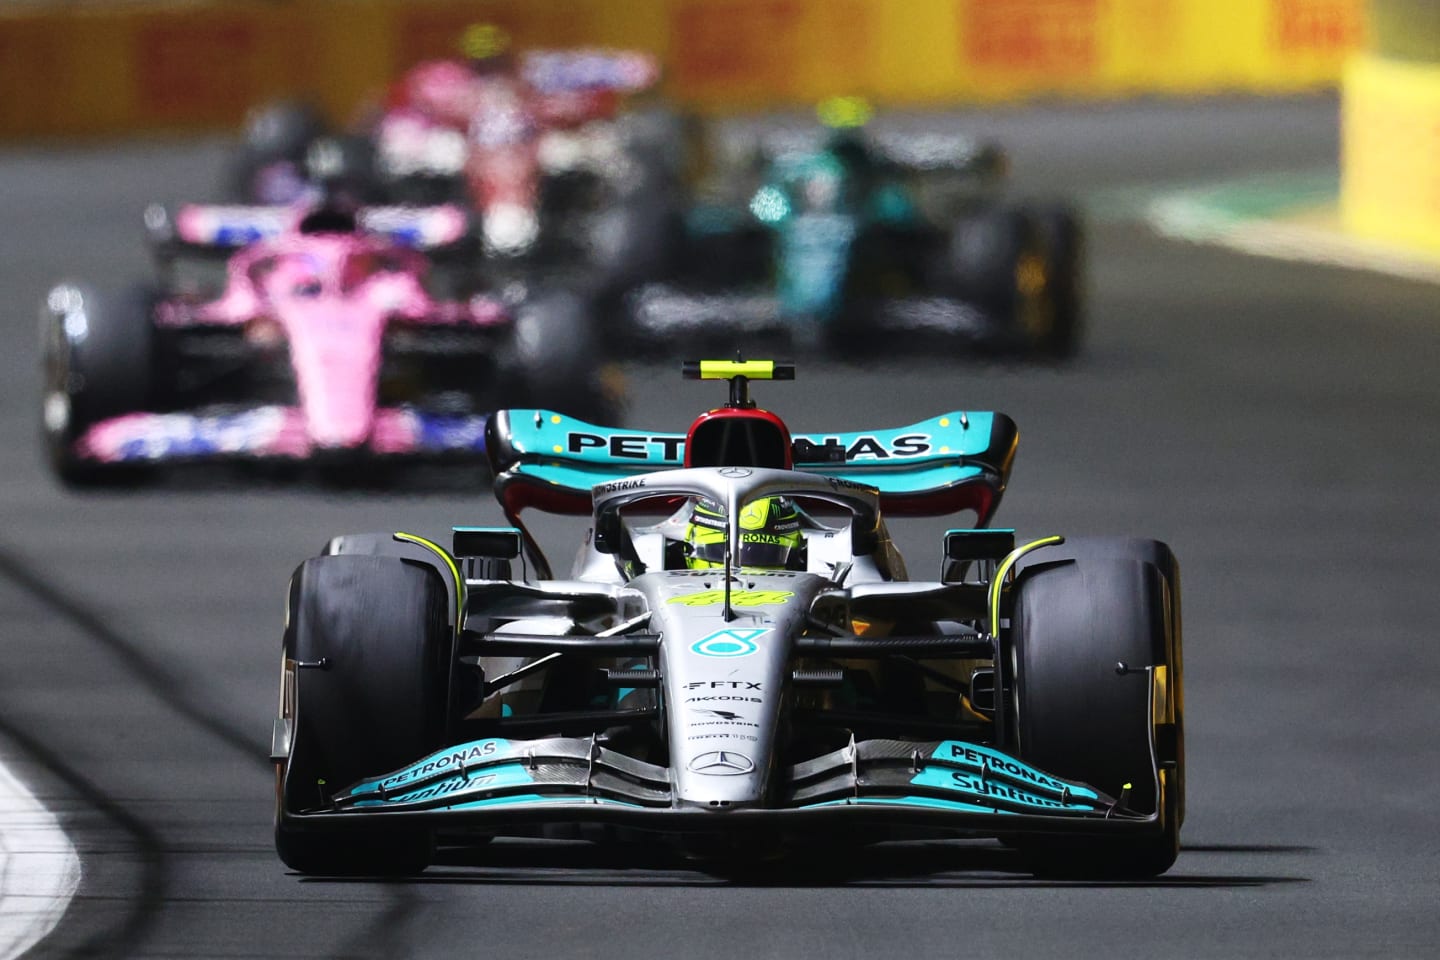 JEDDAH, SAUDI ARABIA - MARCH 27: Lewis Hamilton of Great Britain driving the (44) Mercedes AMG